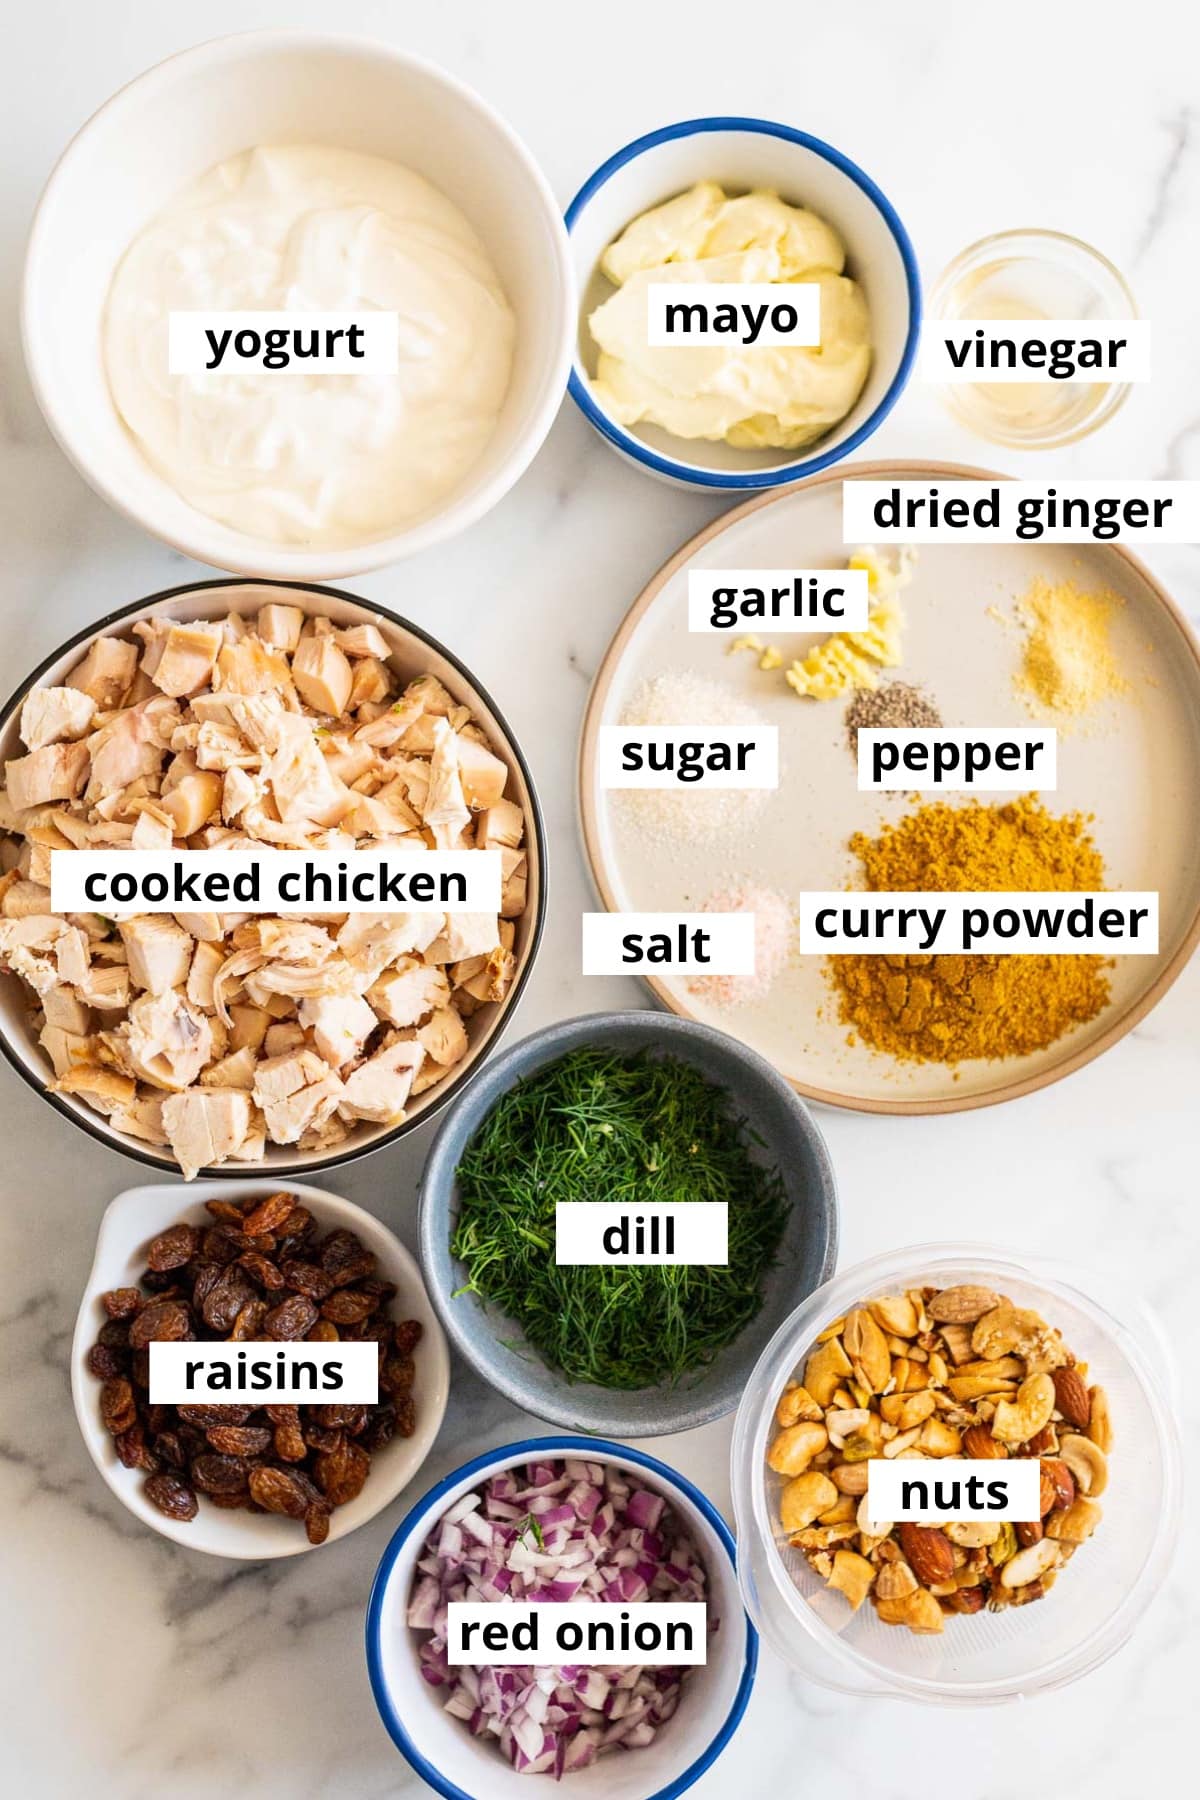 Yogurt, mayo, vinegar, dried ginger, garlic, sugar, salt, pepper, curry powder, cooked chicken, dill, raisins, red onion, nuts.